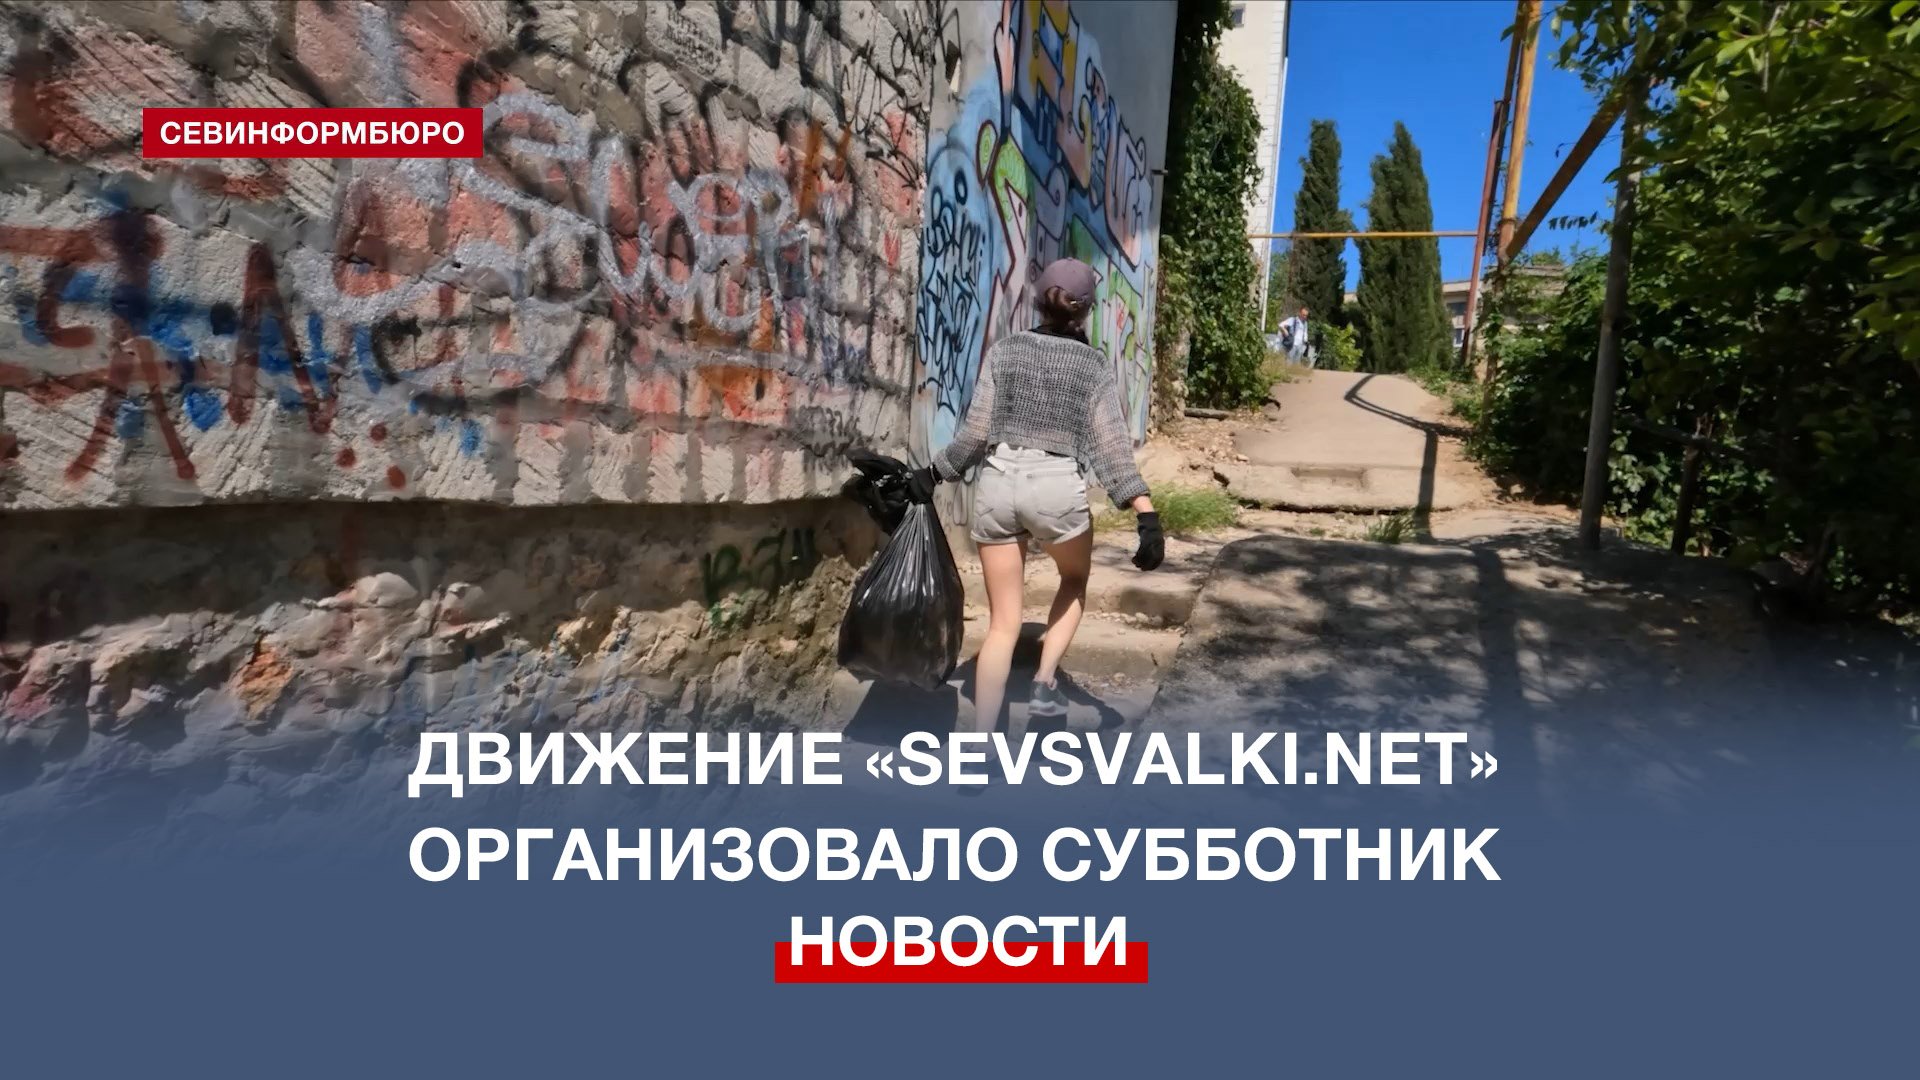 Движение «Sevsvalki.net» провело субботник на улице Маршала Бирюзова